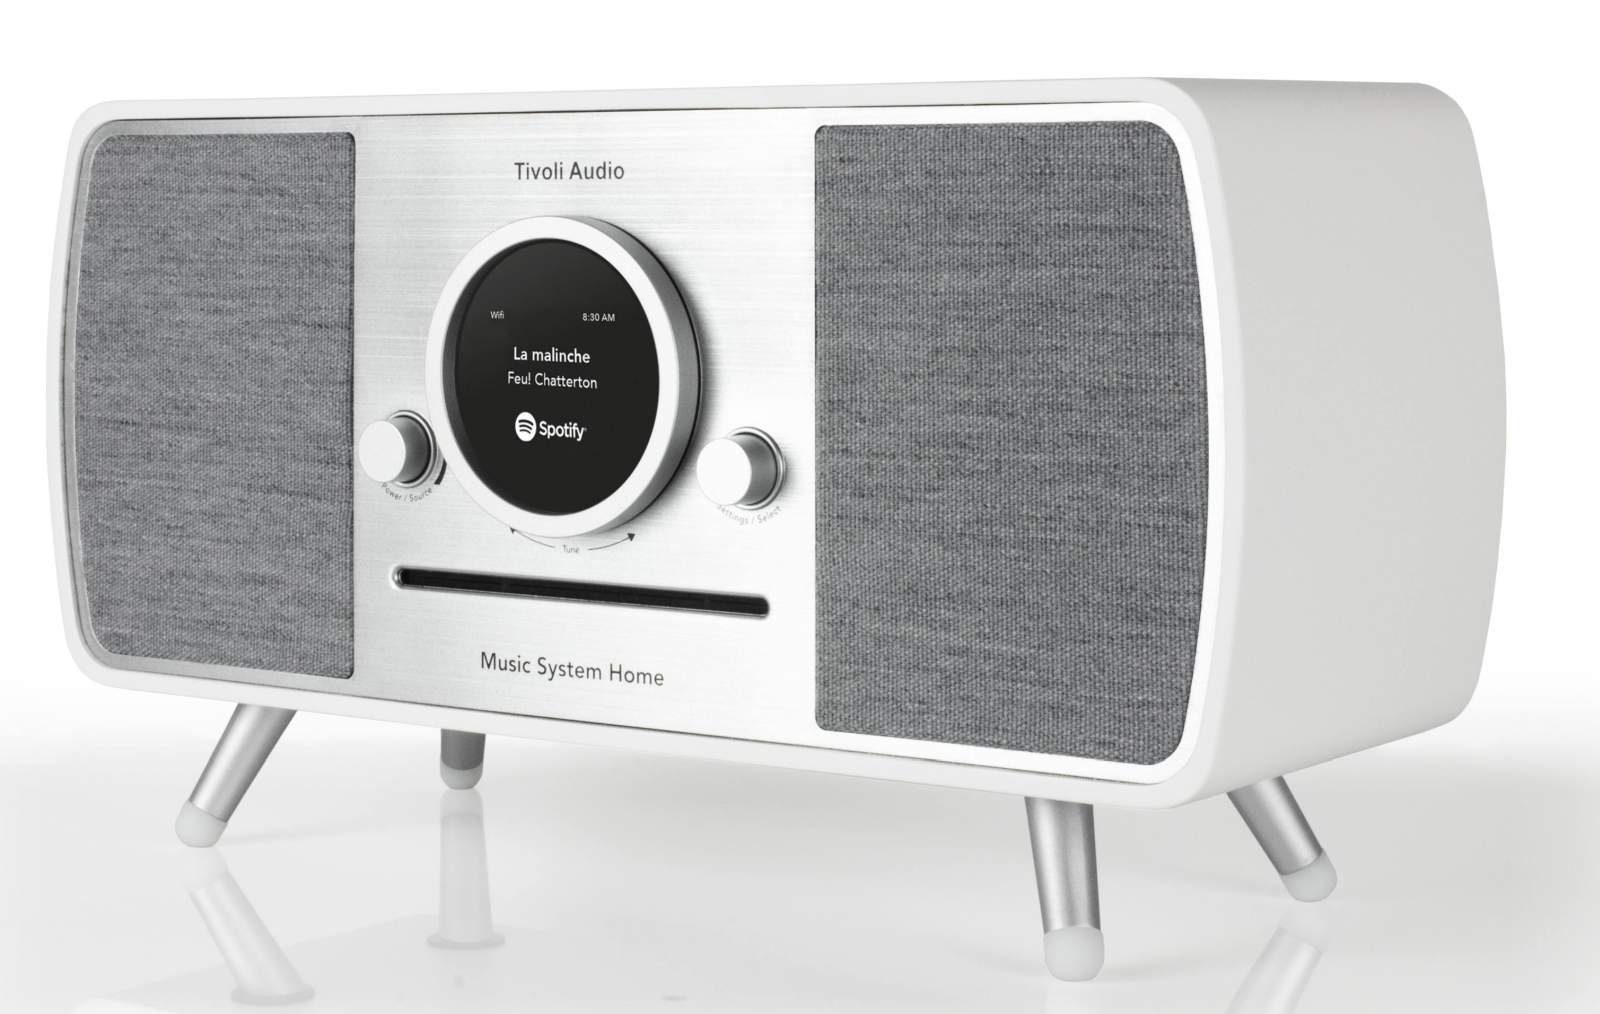 Tivoli Audio »Tivoli Audio Music System Home All-in-one FM/DAB+/«  Stereoanlage (Digitalradio (DAB),FM-Tuner,  LAN/W-LAN,DAB+,CD,Bluetooth,inklusive Fernbedienung,Display mit Uhrzeit,  Weckfunktion,Amazon Alexa, Streamingdienste) online kaufen | OTTO